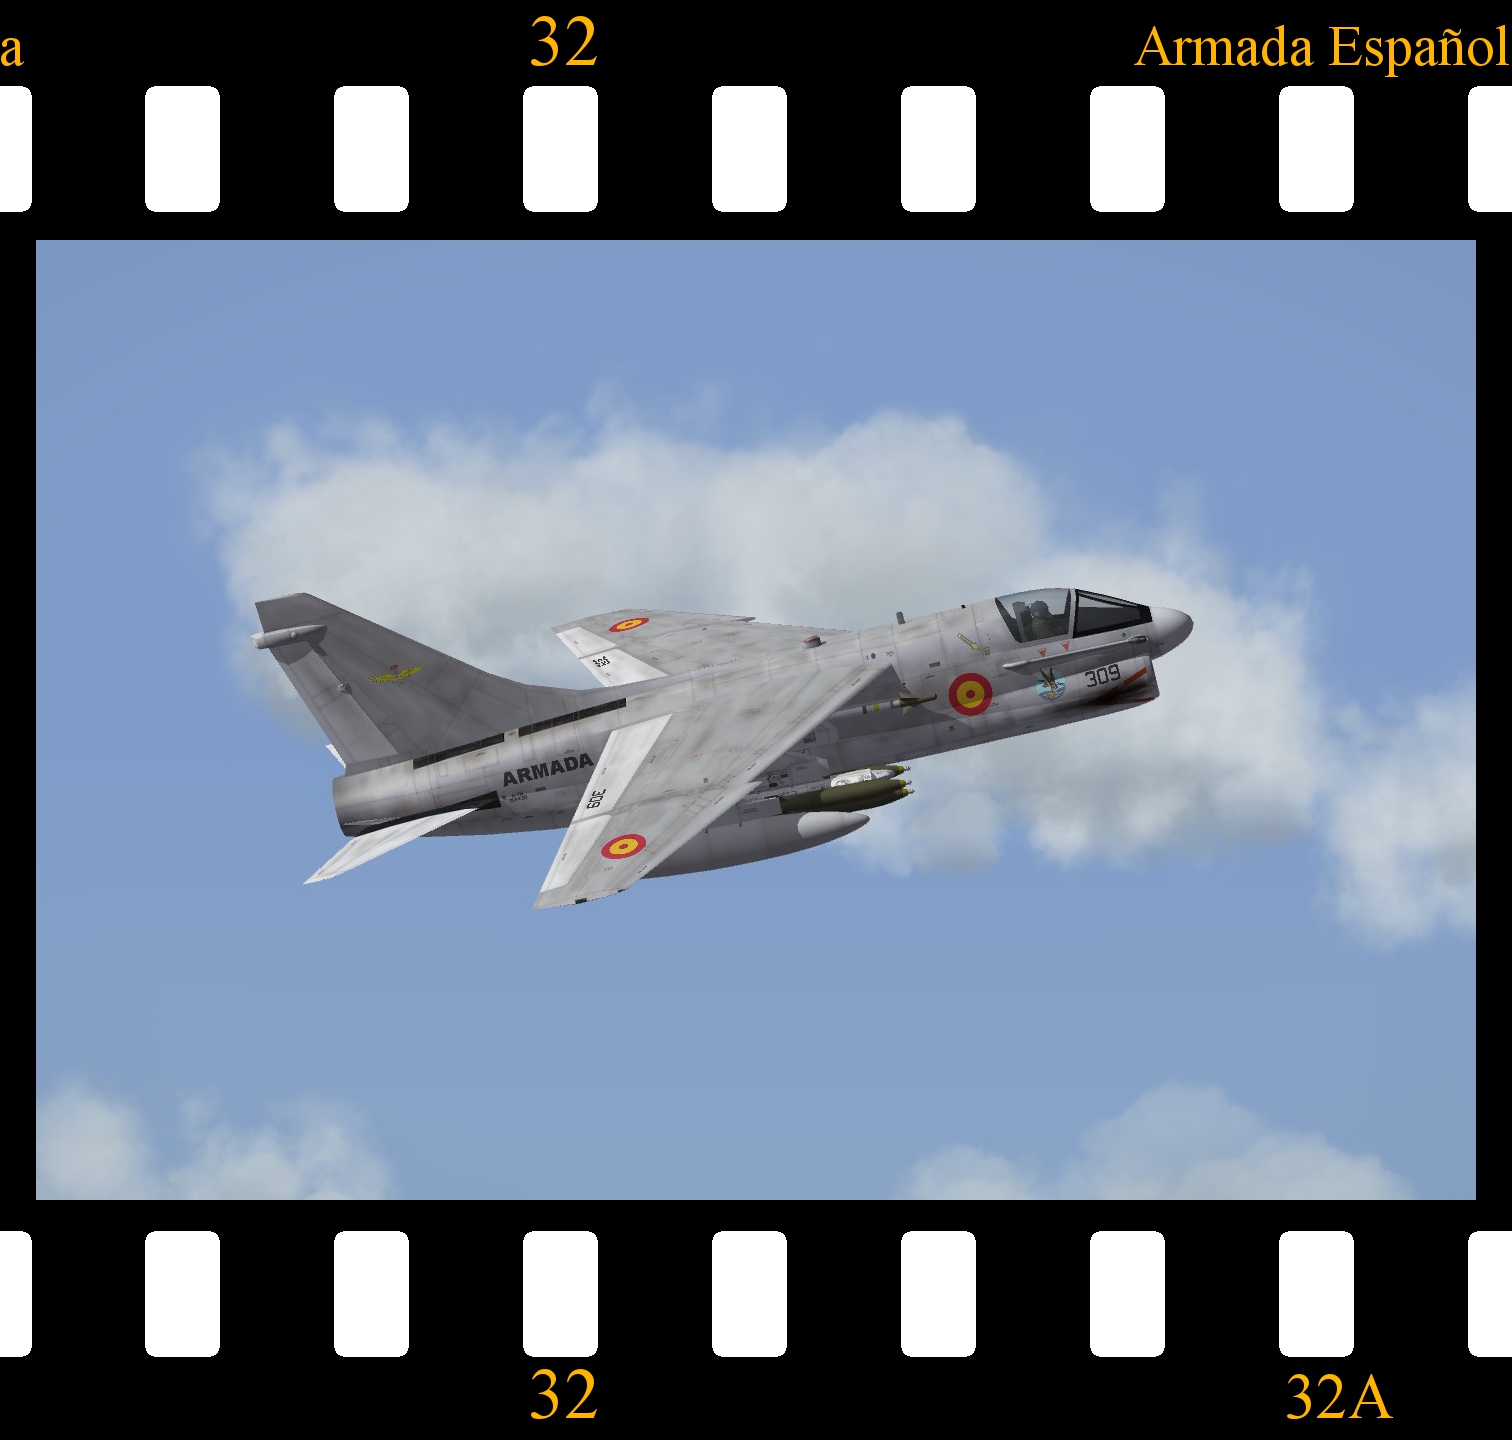 [Fictional] A-7B Corsair II - Armada Española Arma Aérea